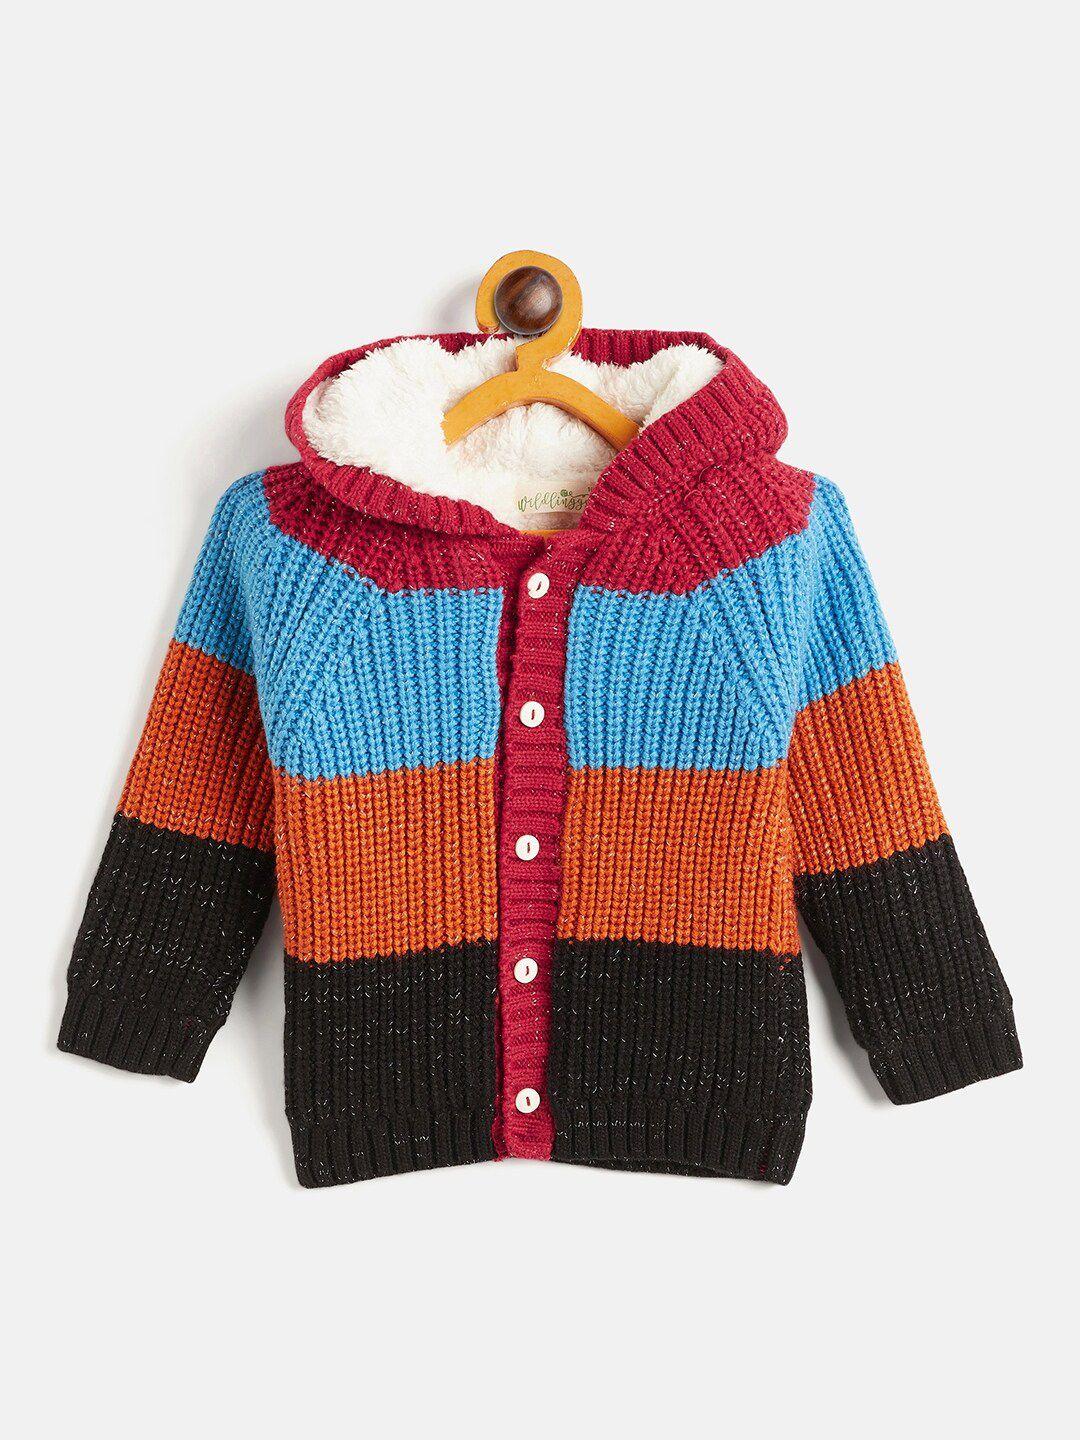 wildlinggs-kids-colourblocked-long-sleeves-pure-cotton-fur-hood-cardigan-sweater